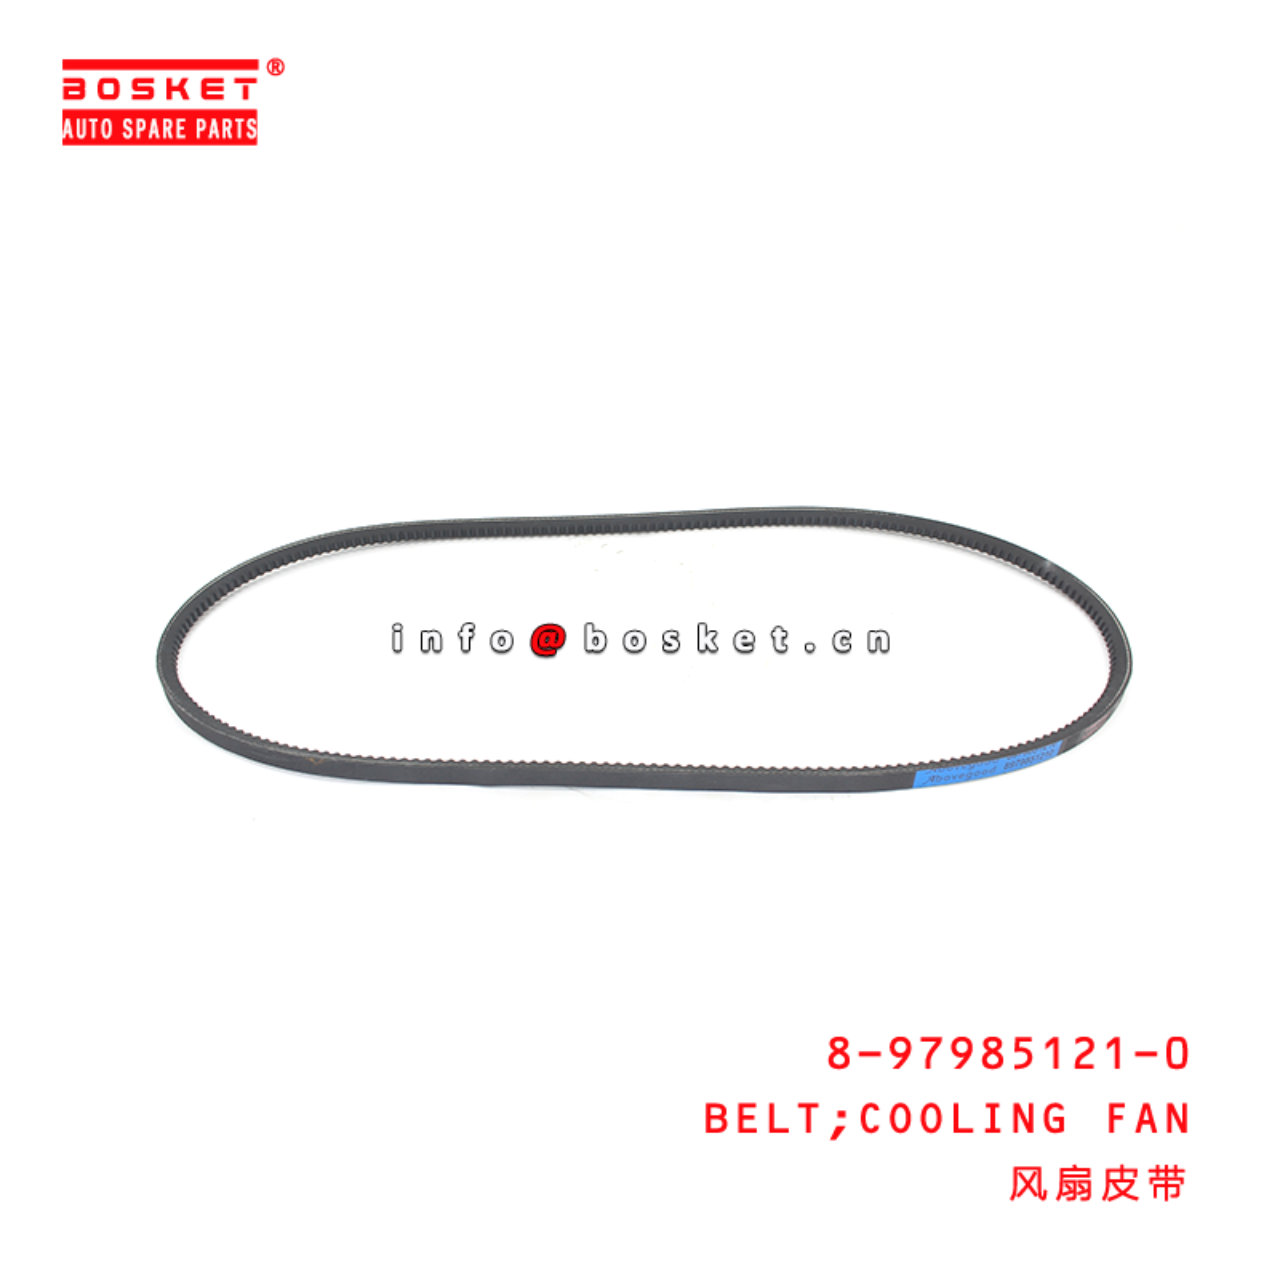 8-97985121-0 Cooling Fan Belt Suitable for ISUZU DMAX 4JA1 8979851210